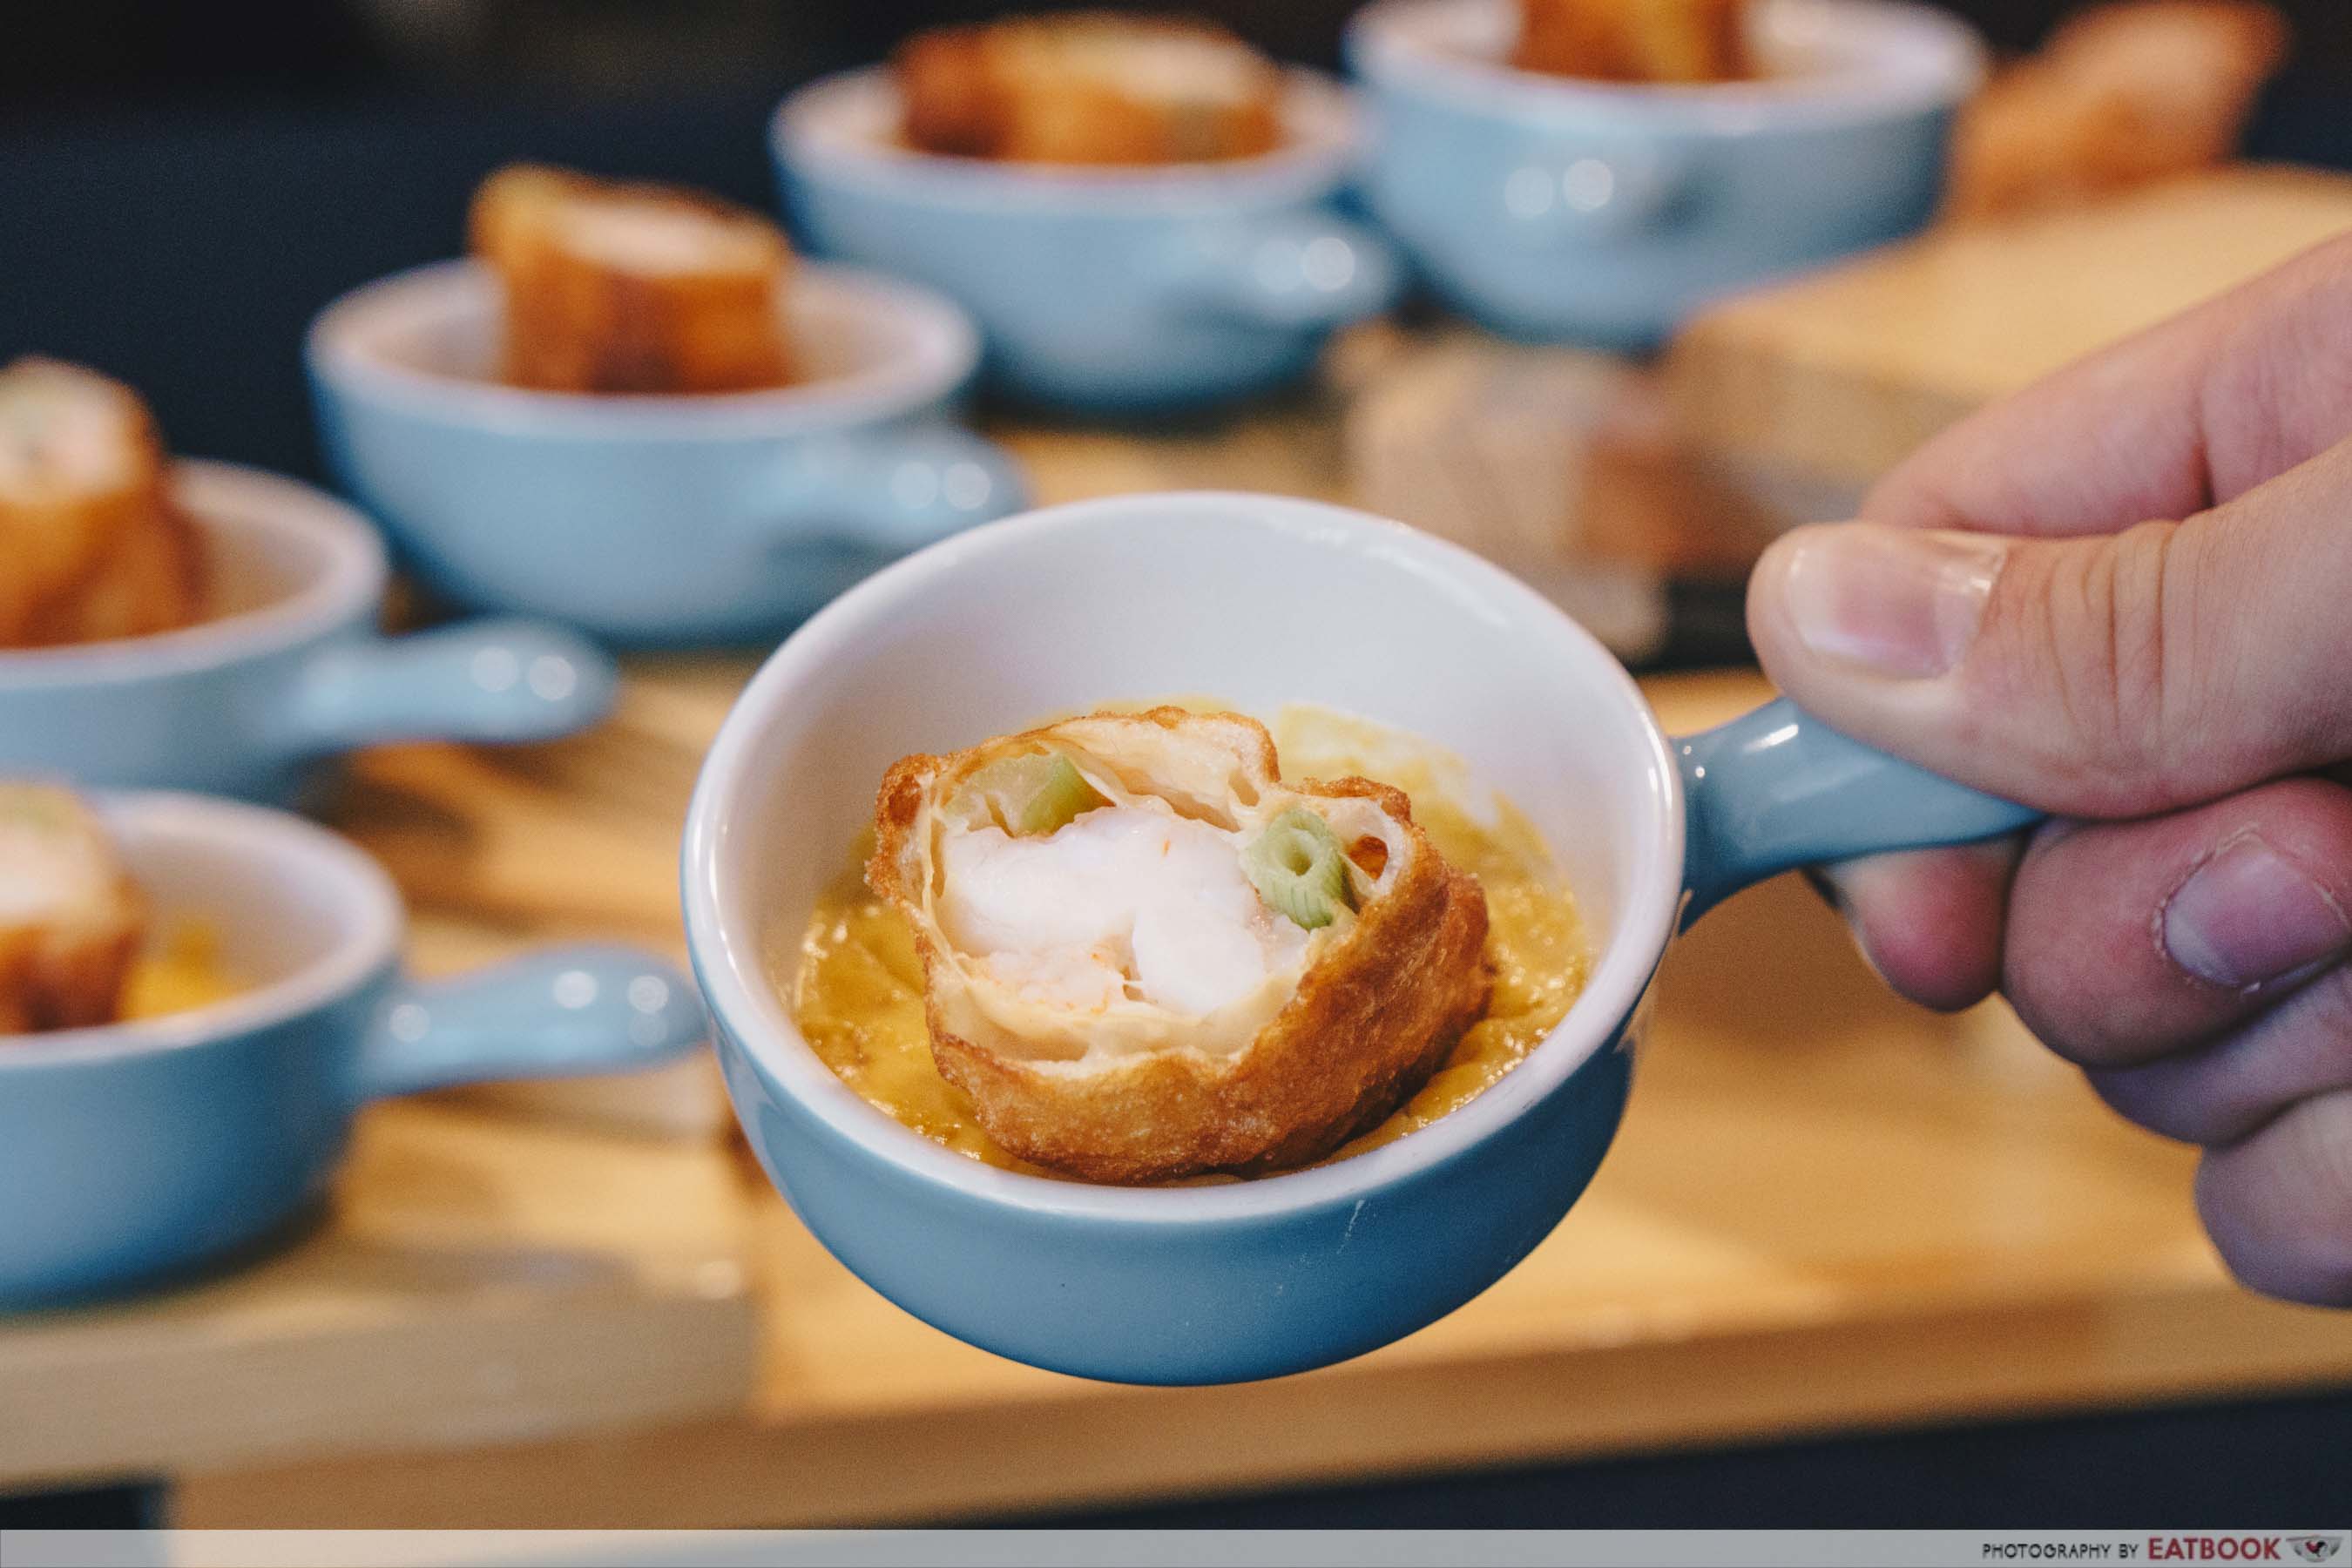 maybank michelin chinese restaurants chef kang's crispy golden prawn rolls with salted egg yolk